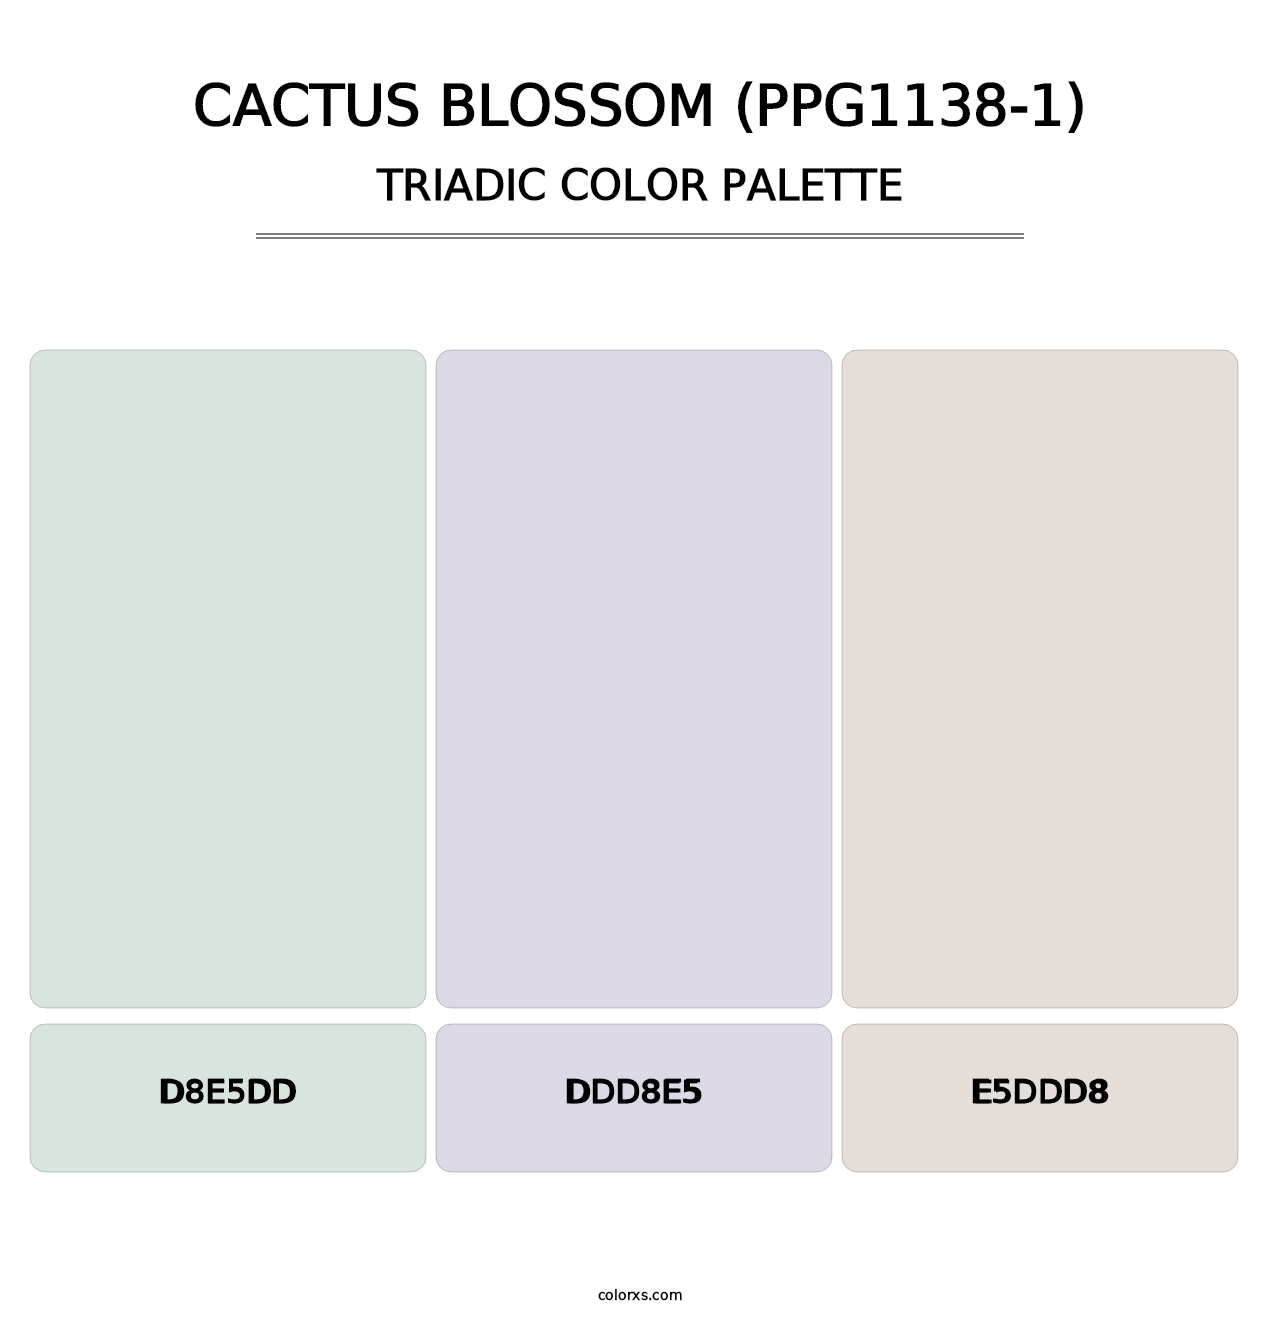 Cactus Blossom (PPG1138-1) - Triadic Color Palette